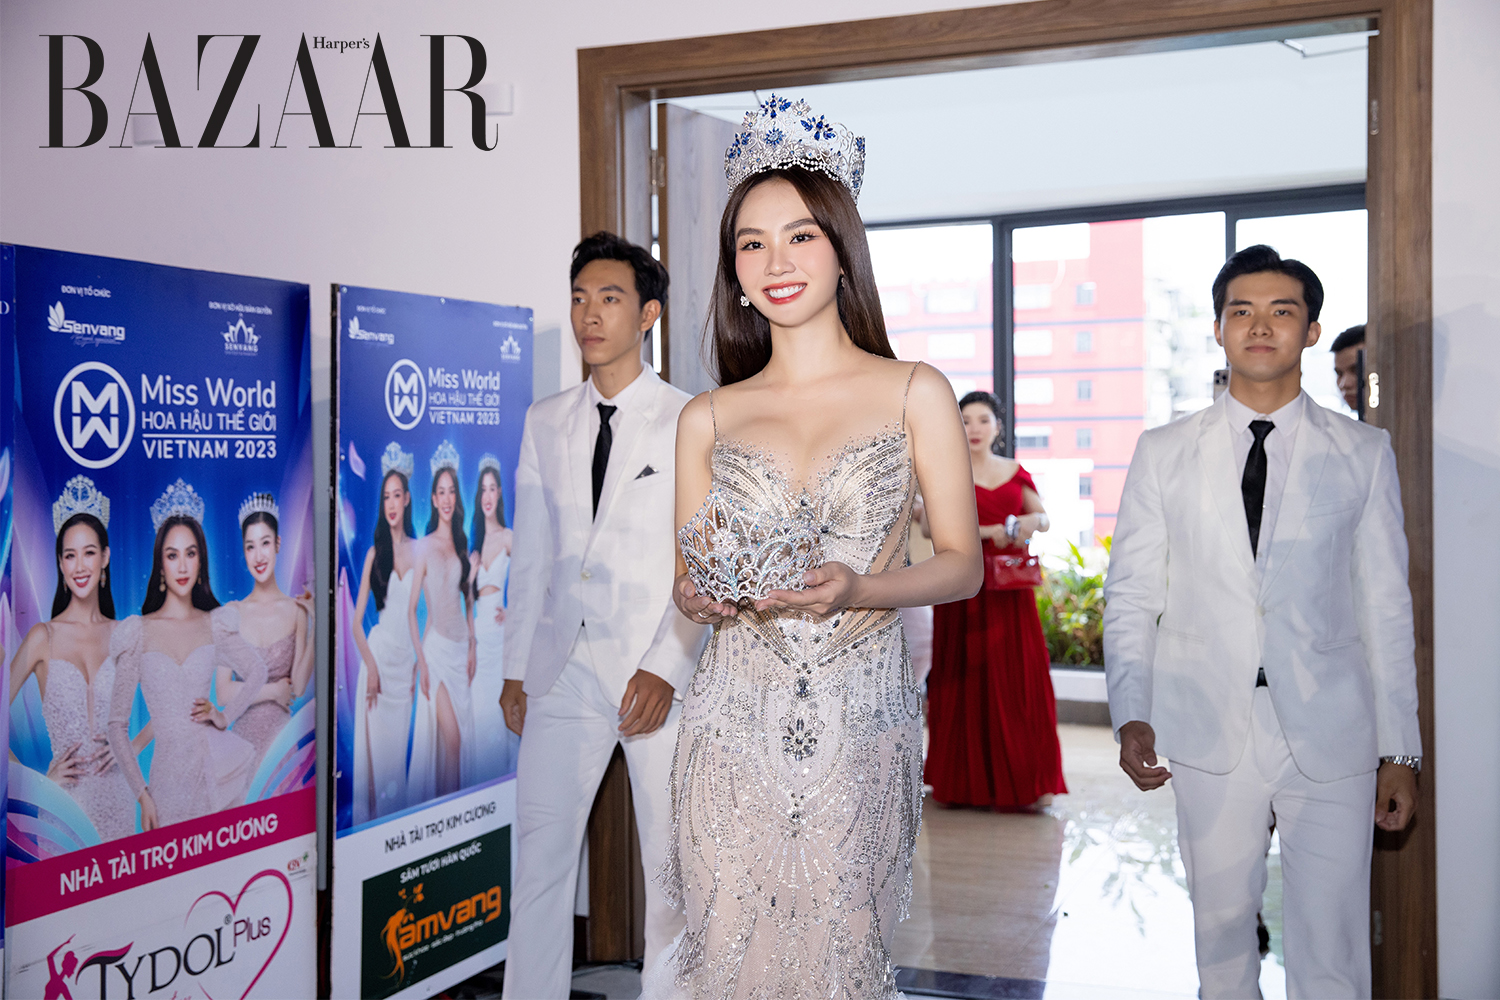 Harper's Bazaar_họp báo chung khảo Miss World Vietnam 2023_02